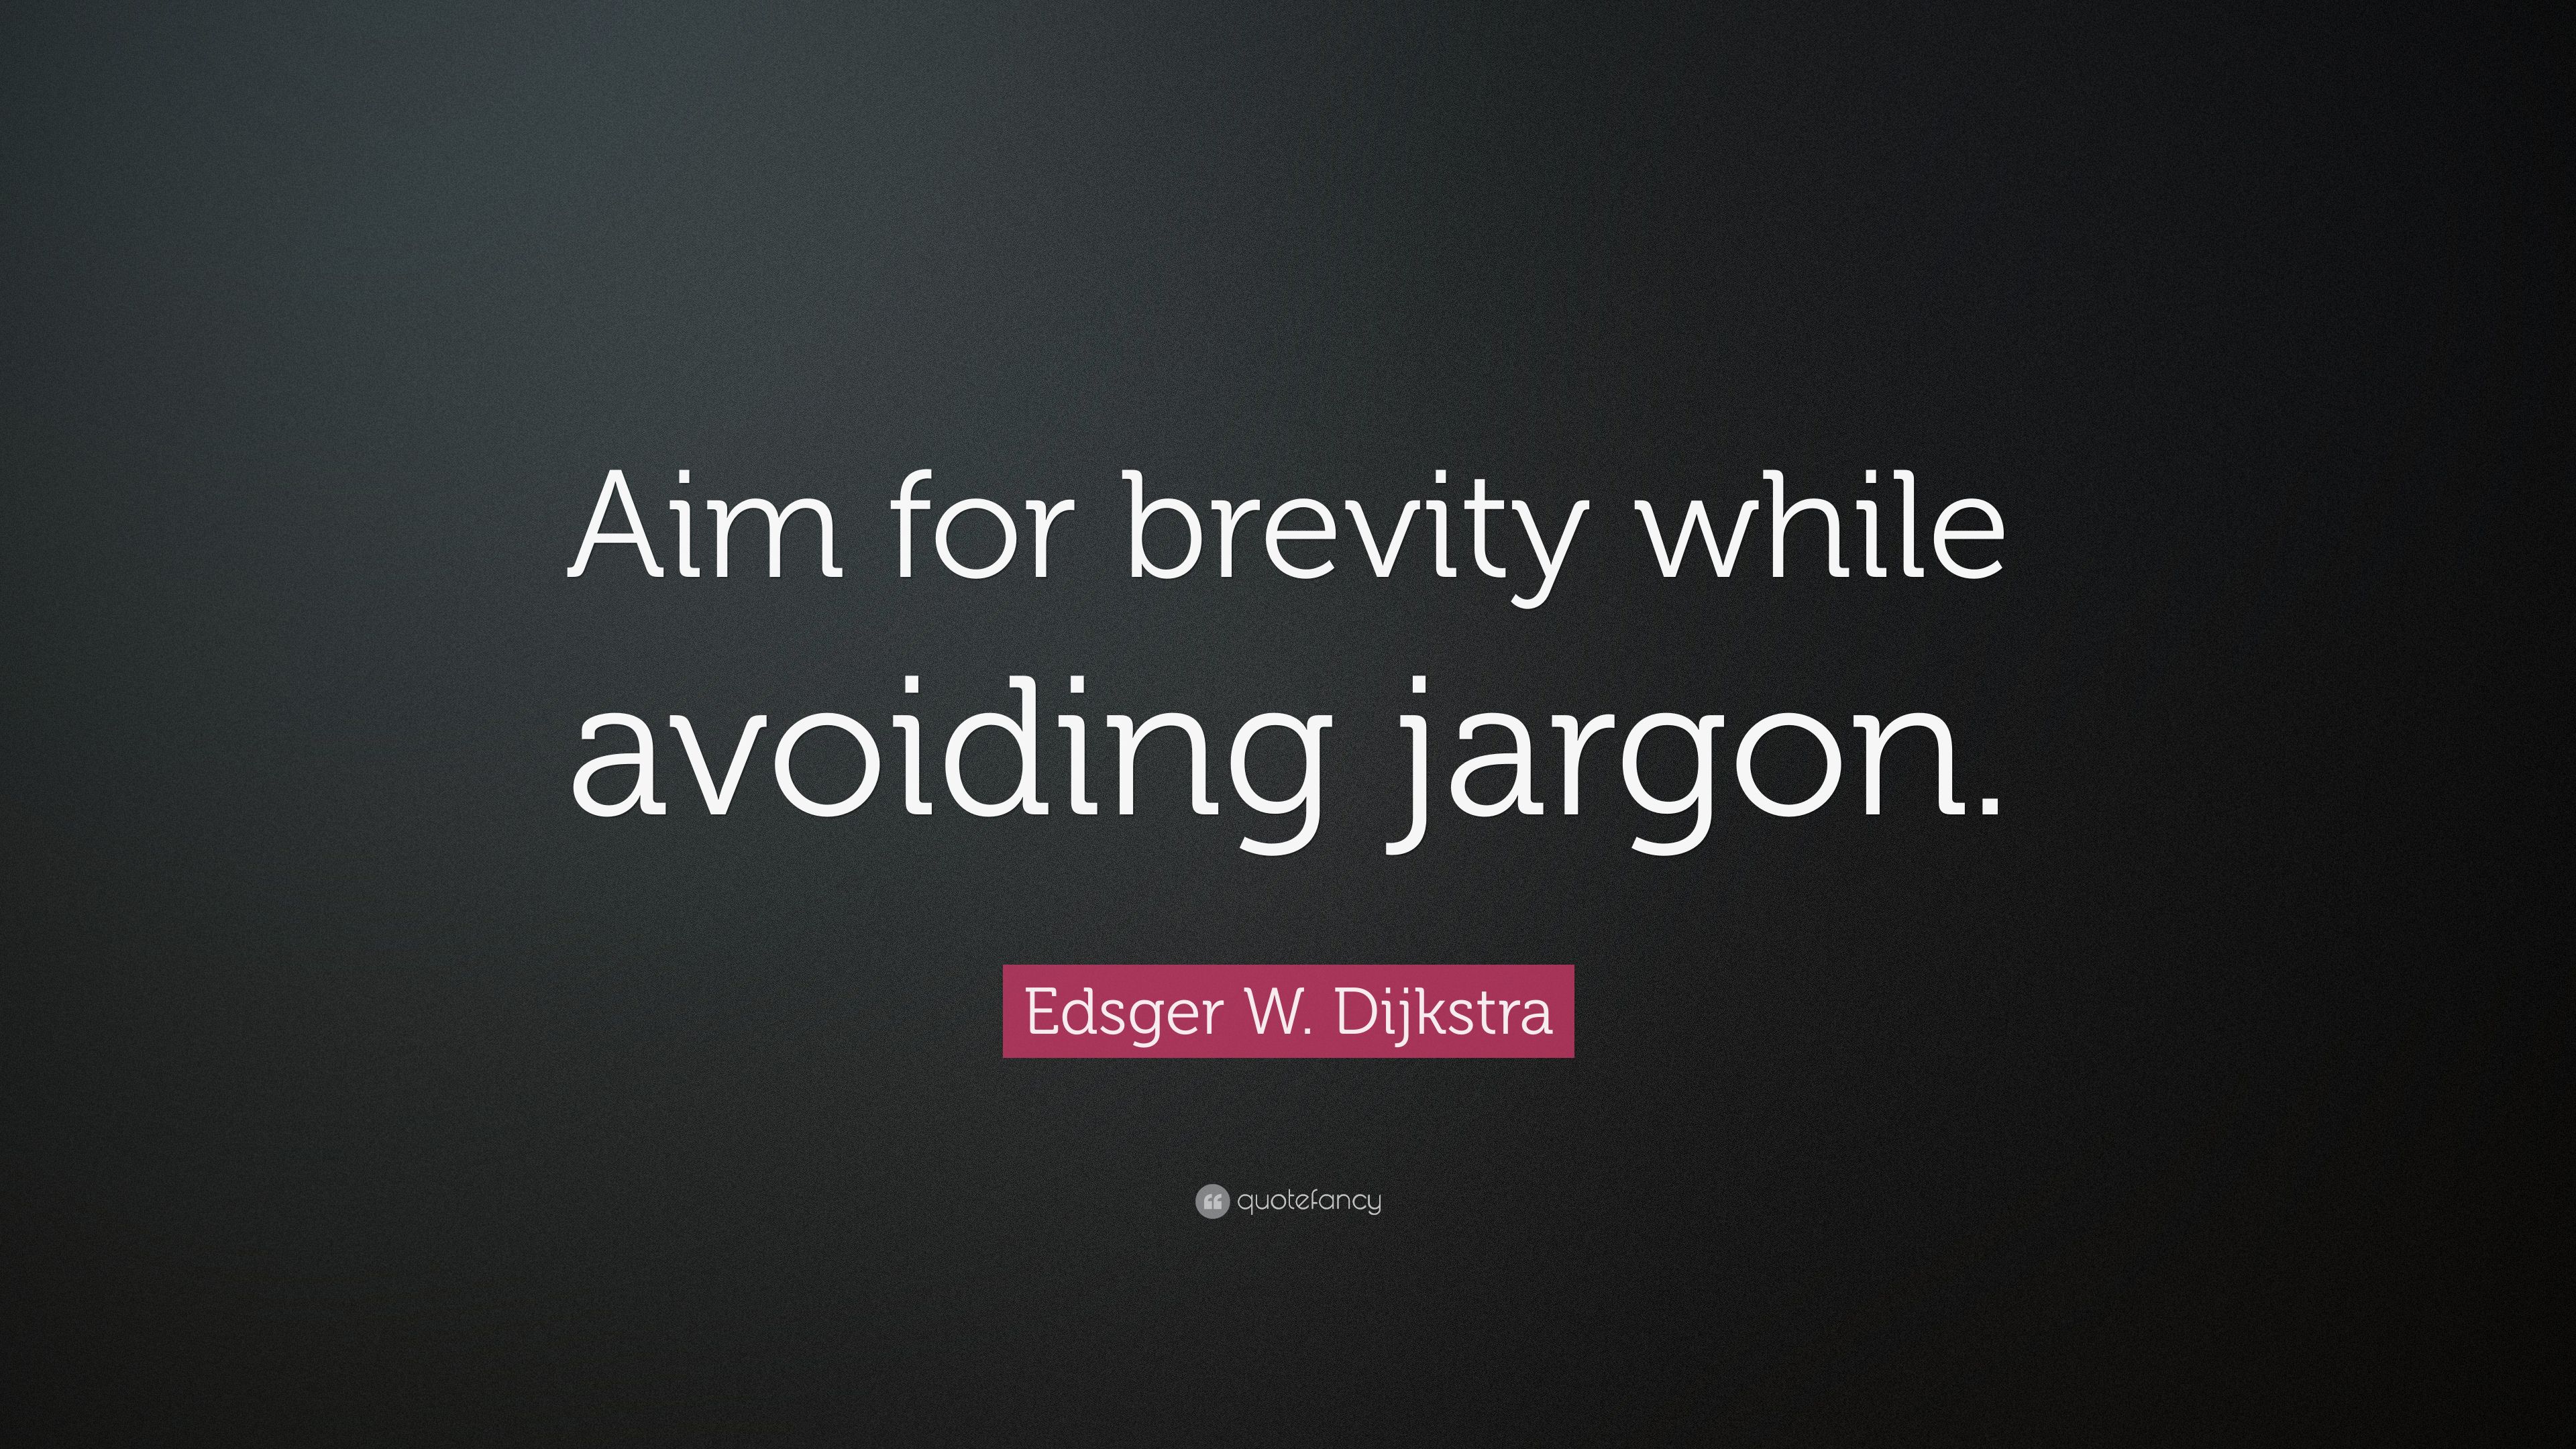 Edsger W. Dijkstra Quote: “Aim for brevity while avoiding jargon